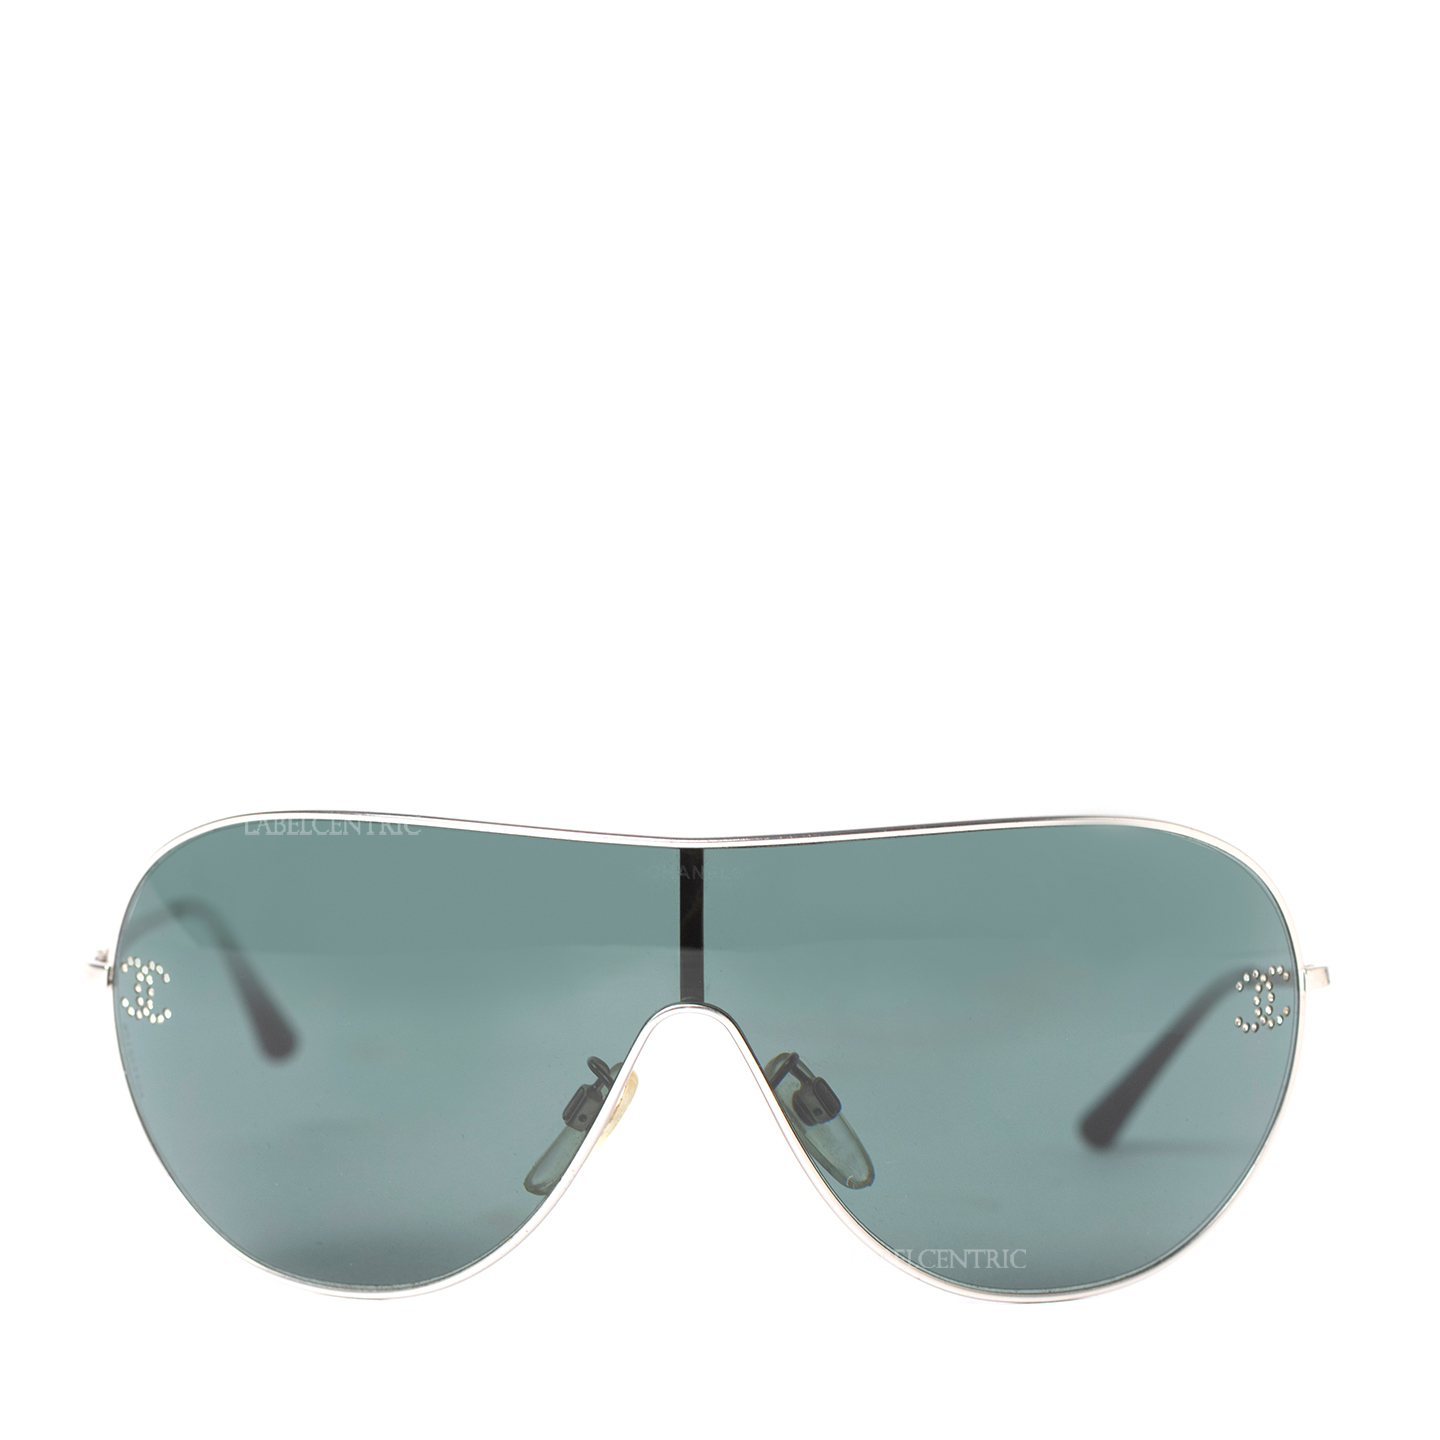 Chanel Pilot Aviators Sunglasses 4279B C159/S6 58 52 140 NEW FULL SET | eBay